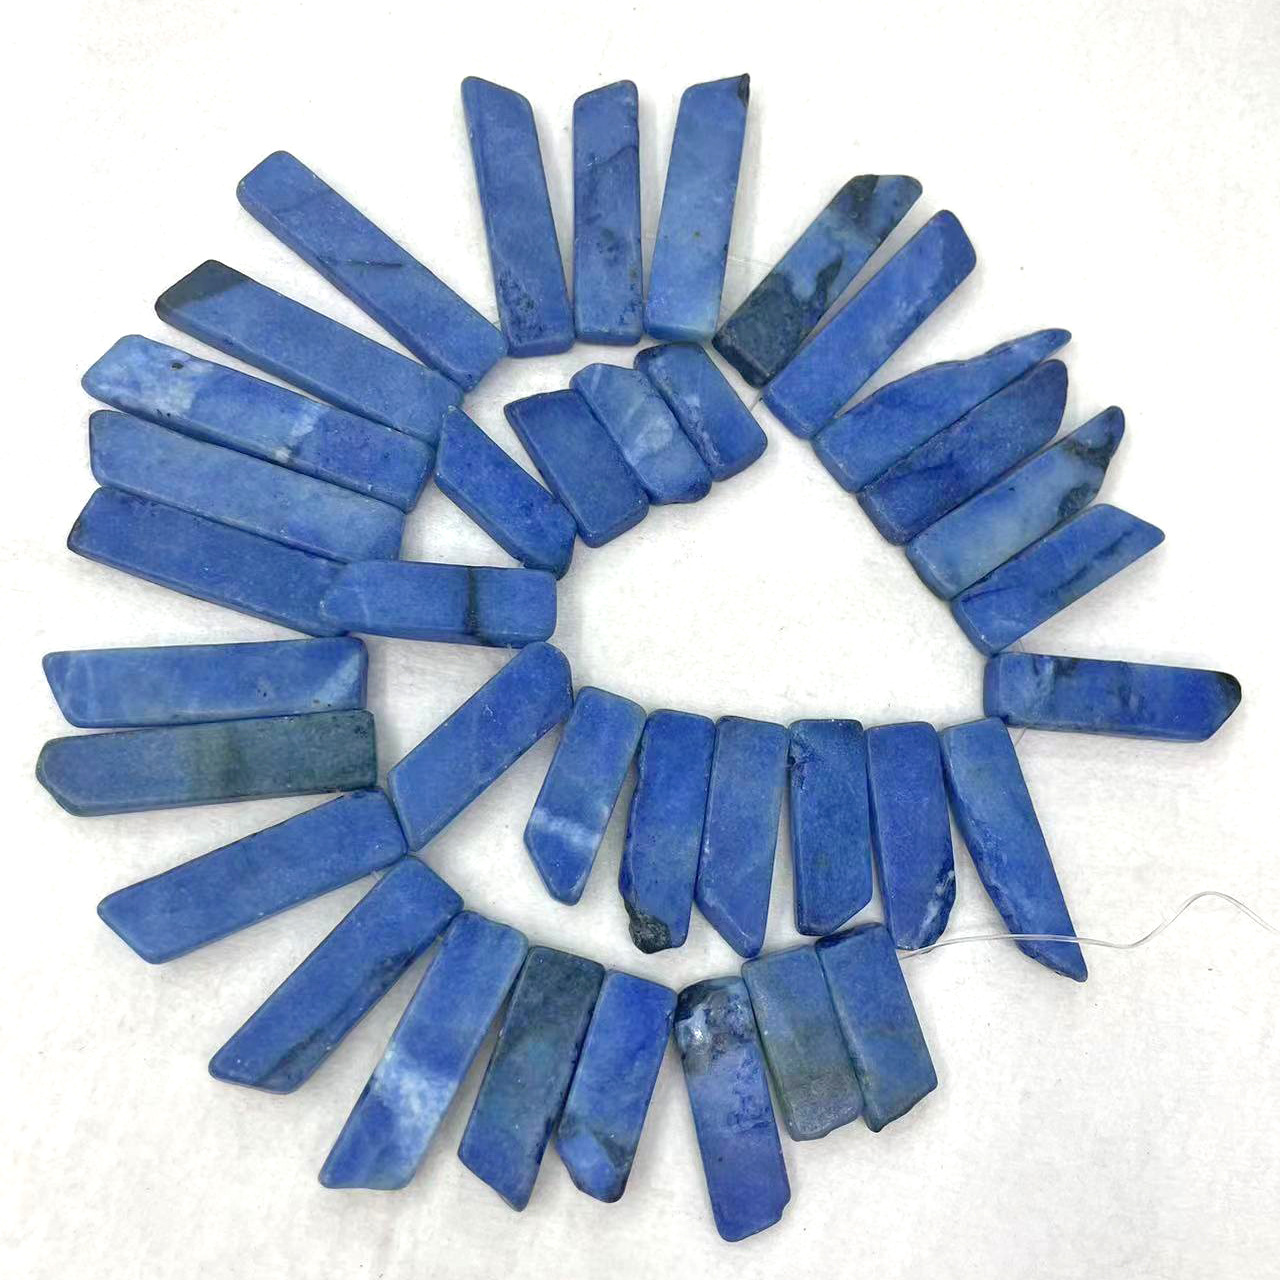 Blue quartz stone